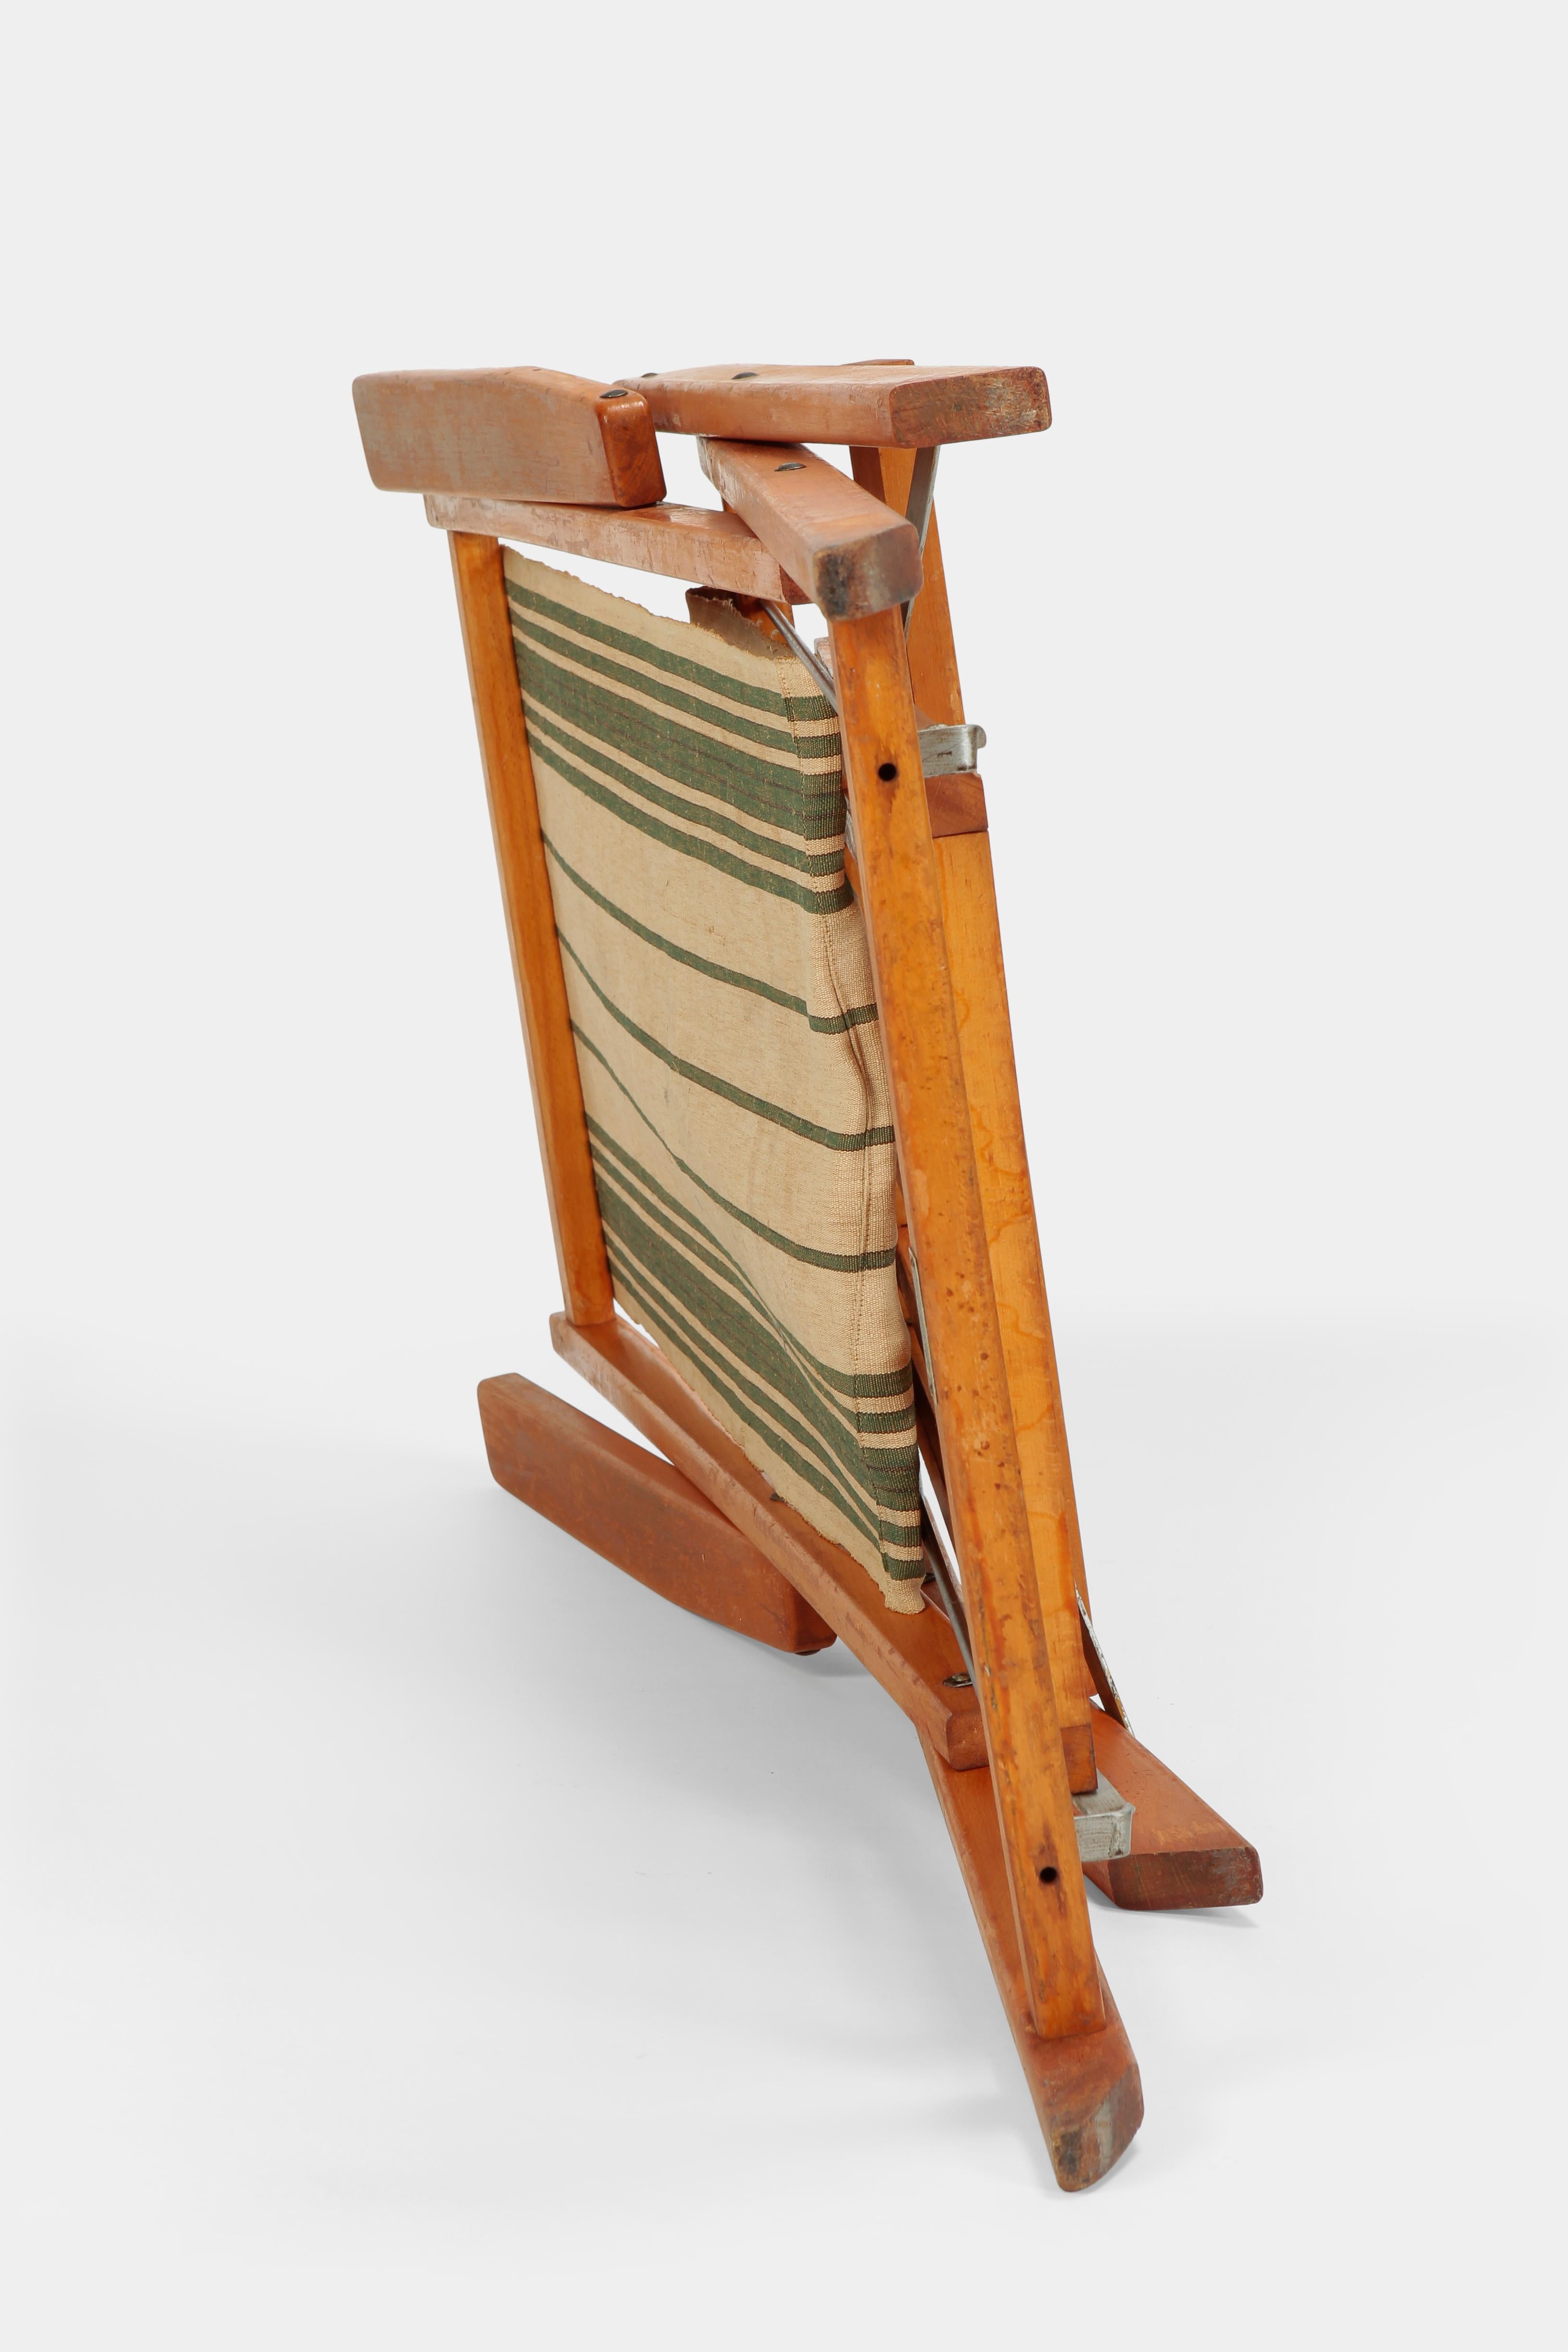 Fritz Fahrner Folding Chair, 1930s 5